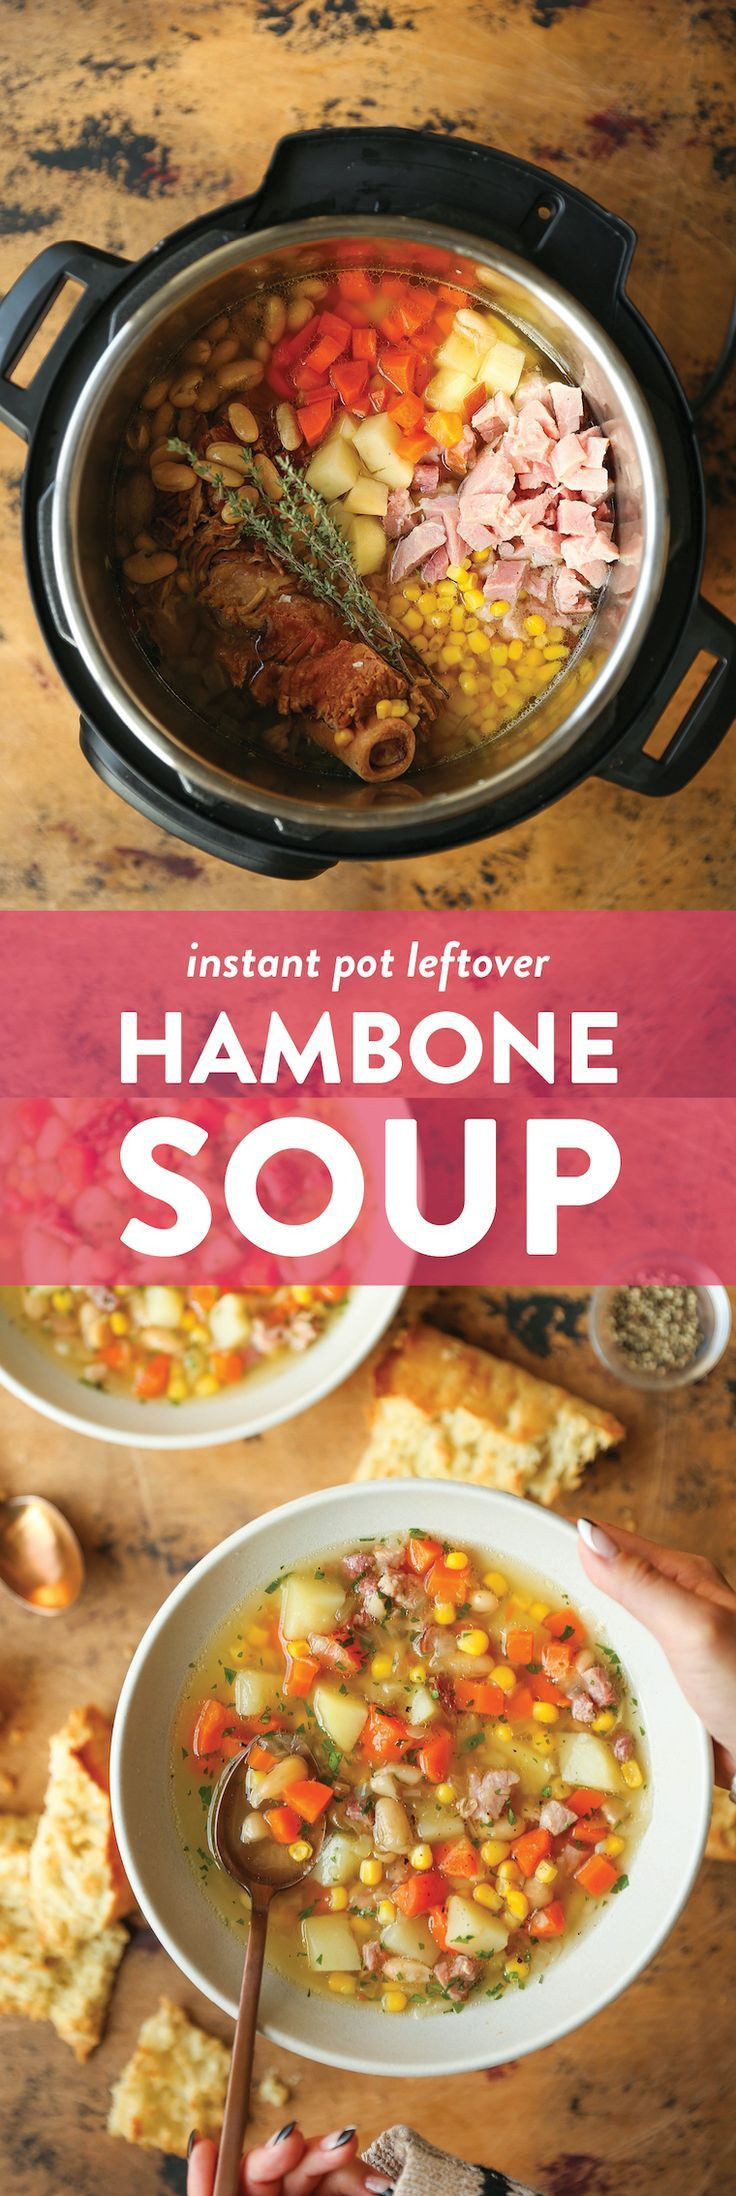 Instant Pot Leftover Ham Recipes
 Instant Pot Leftover Hambone Soup Recipe